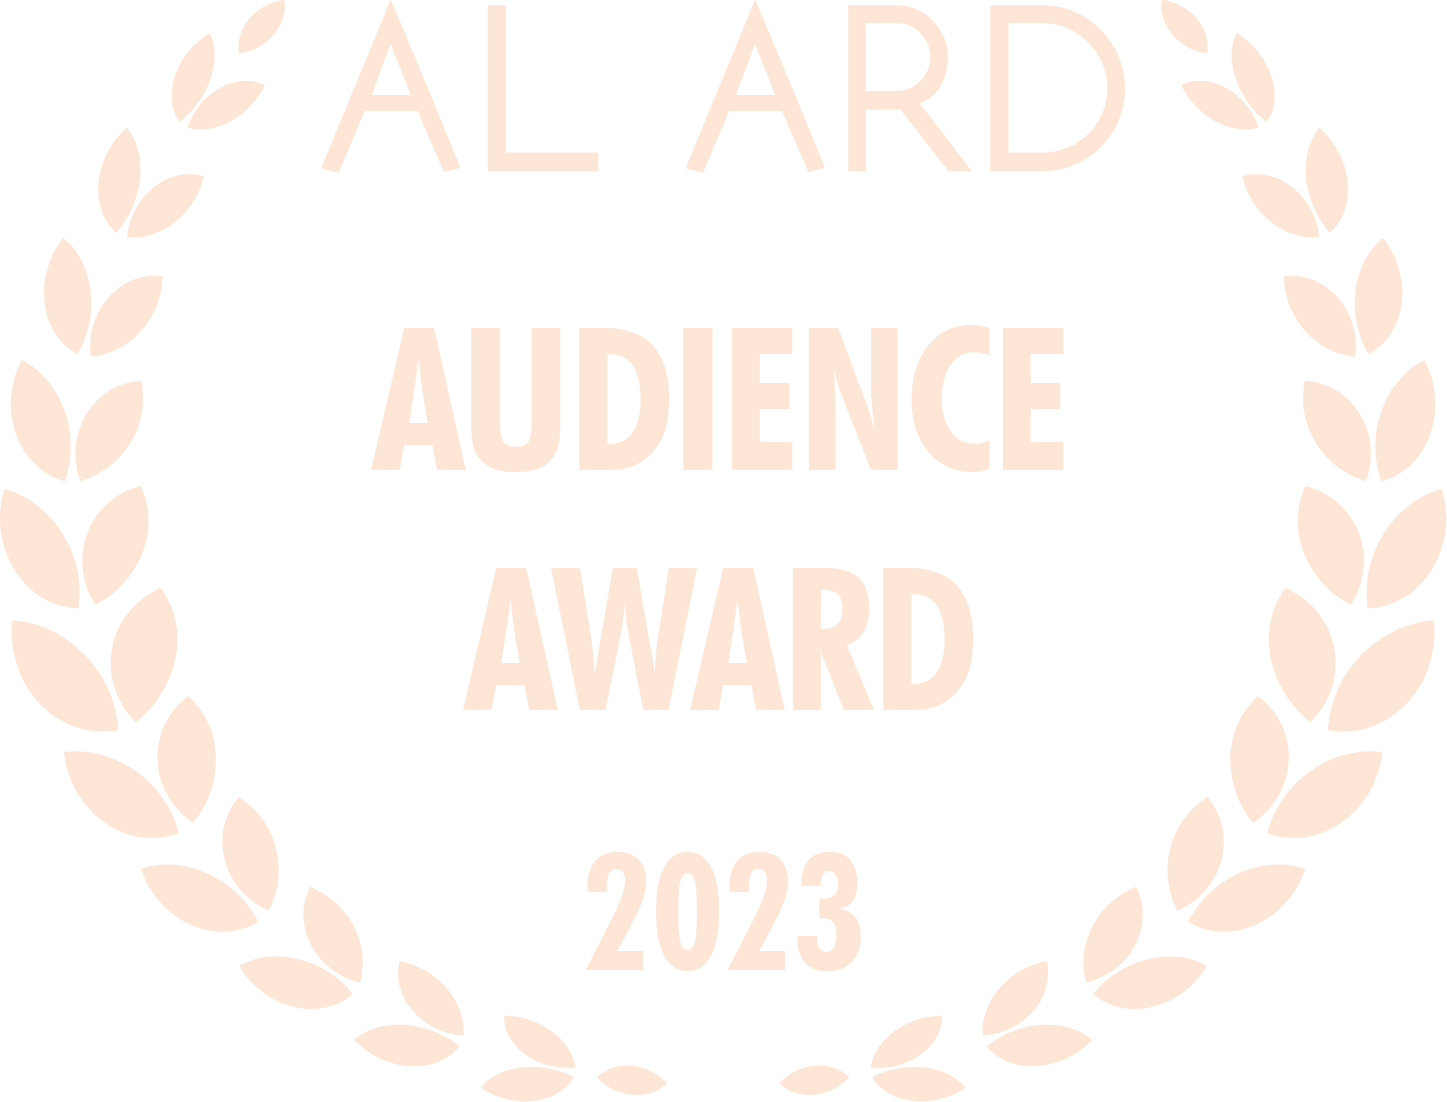 Audience Award